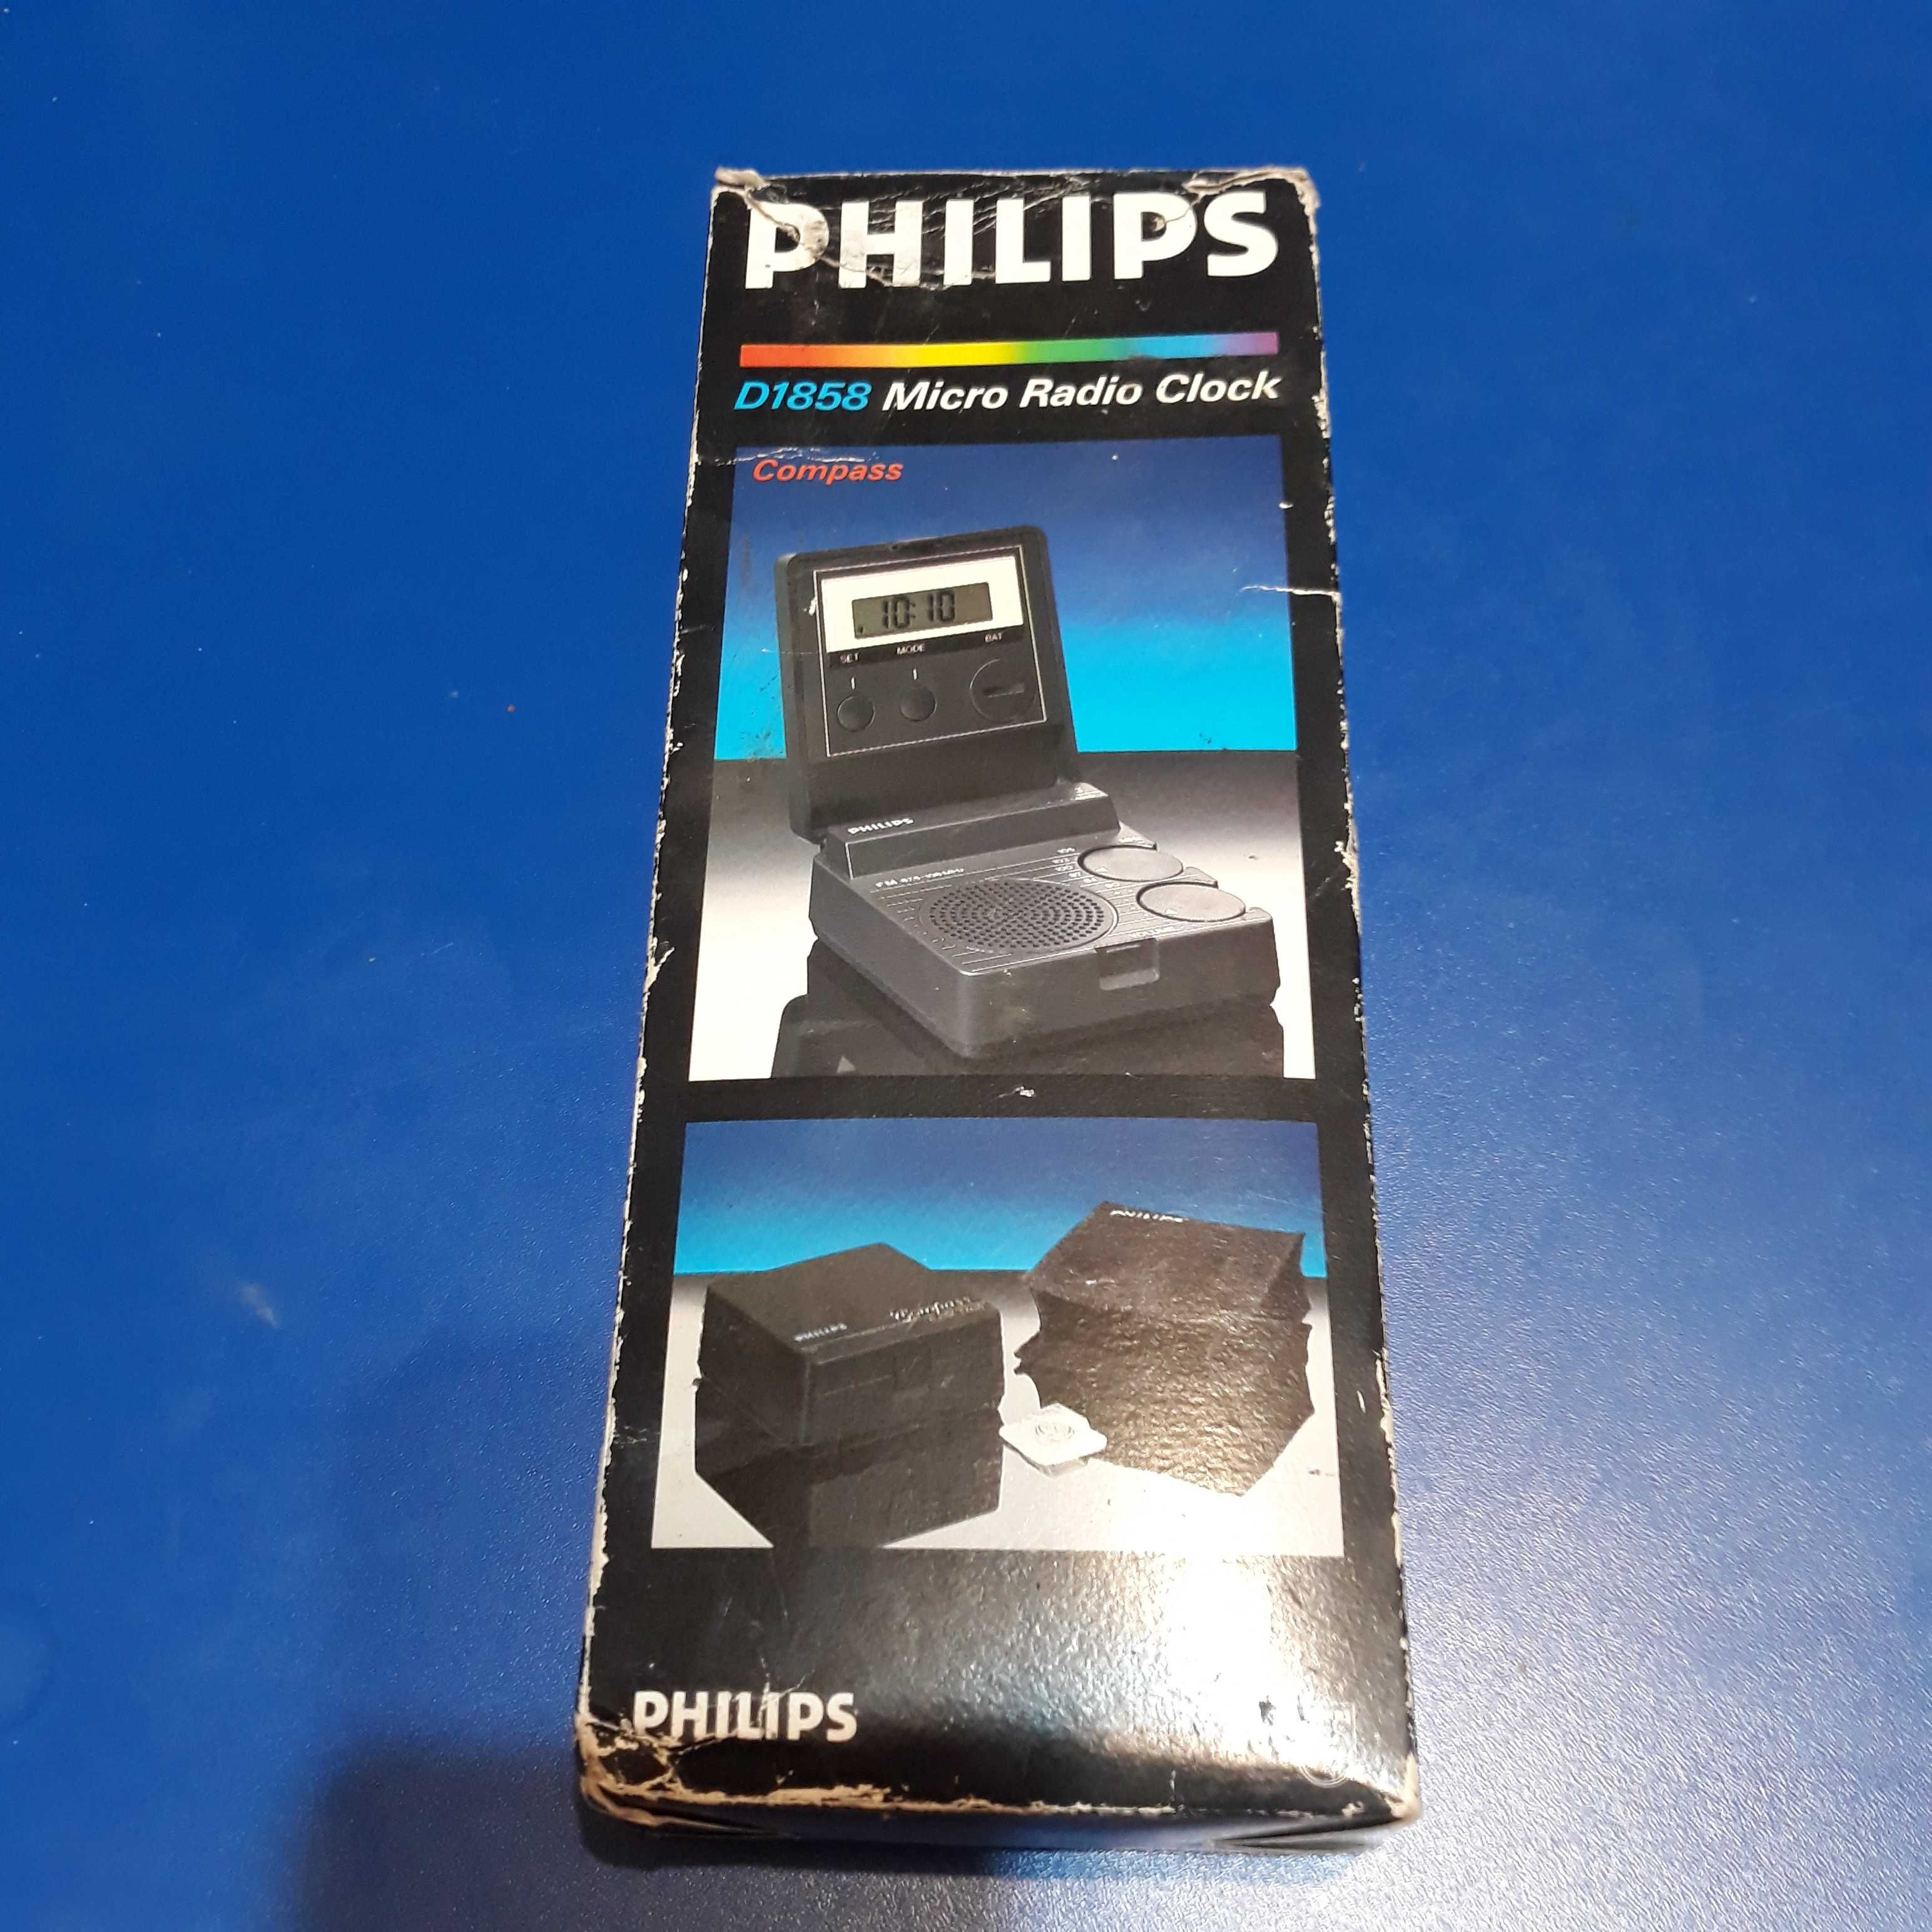 Radio / ceas PHILIPS -model D1858 micro radio  / compass